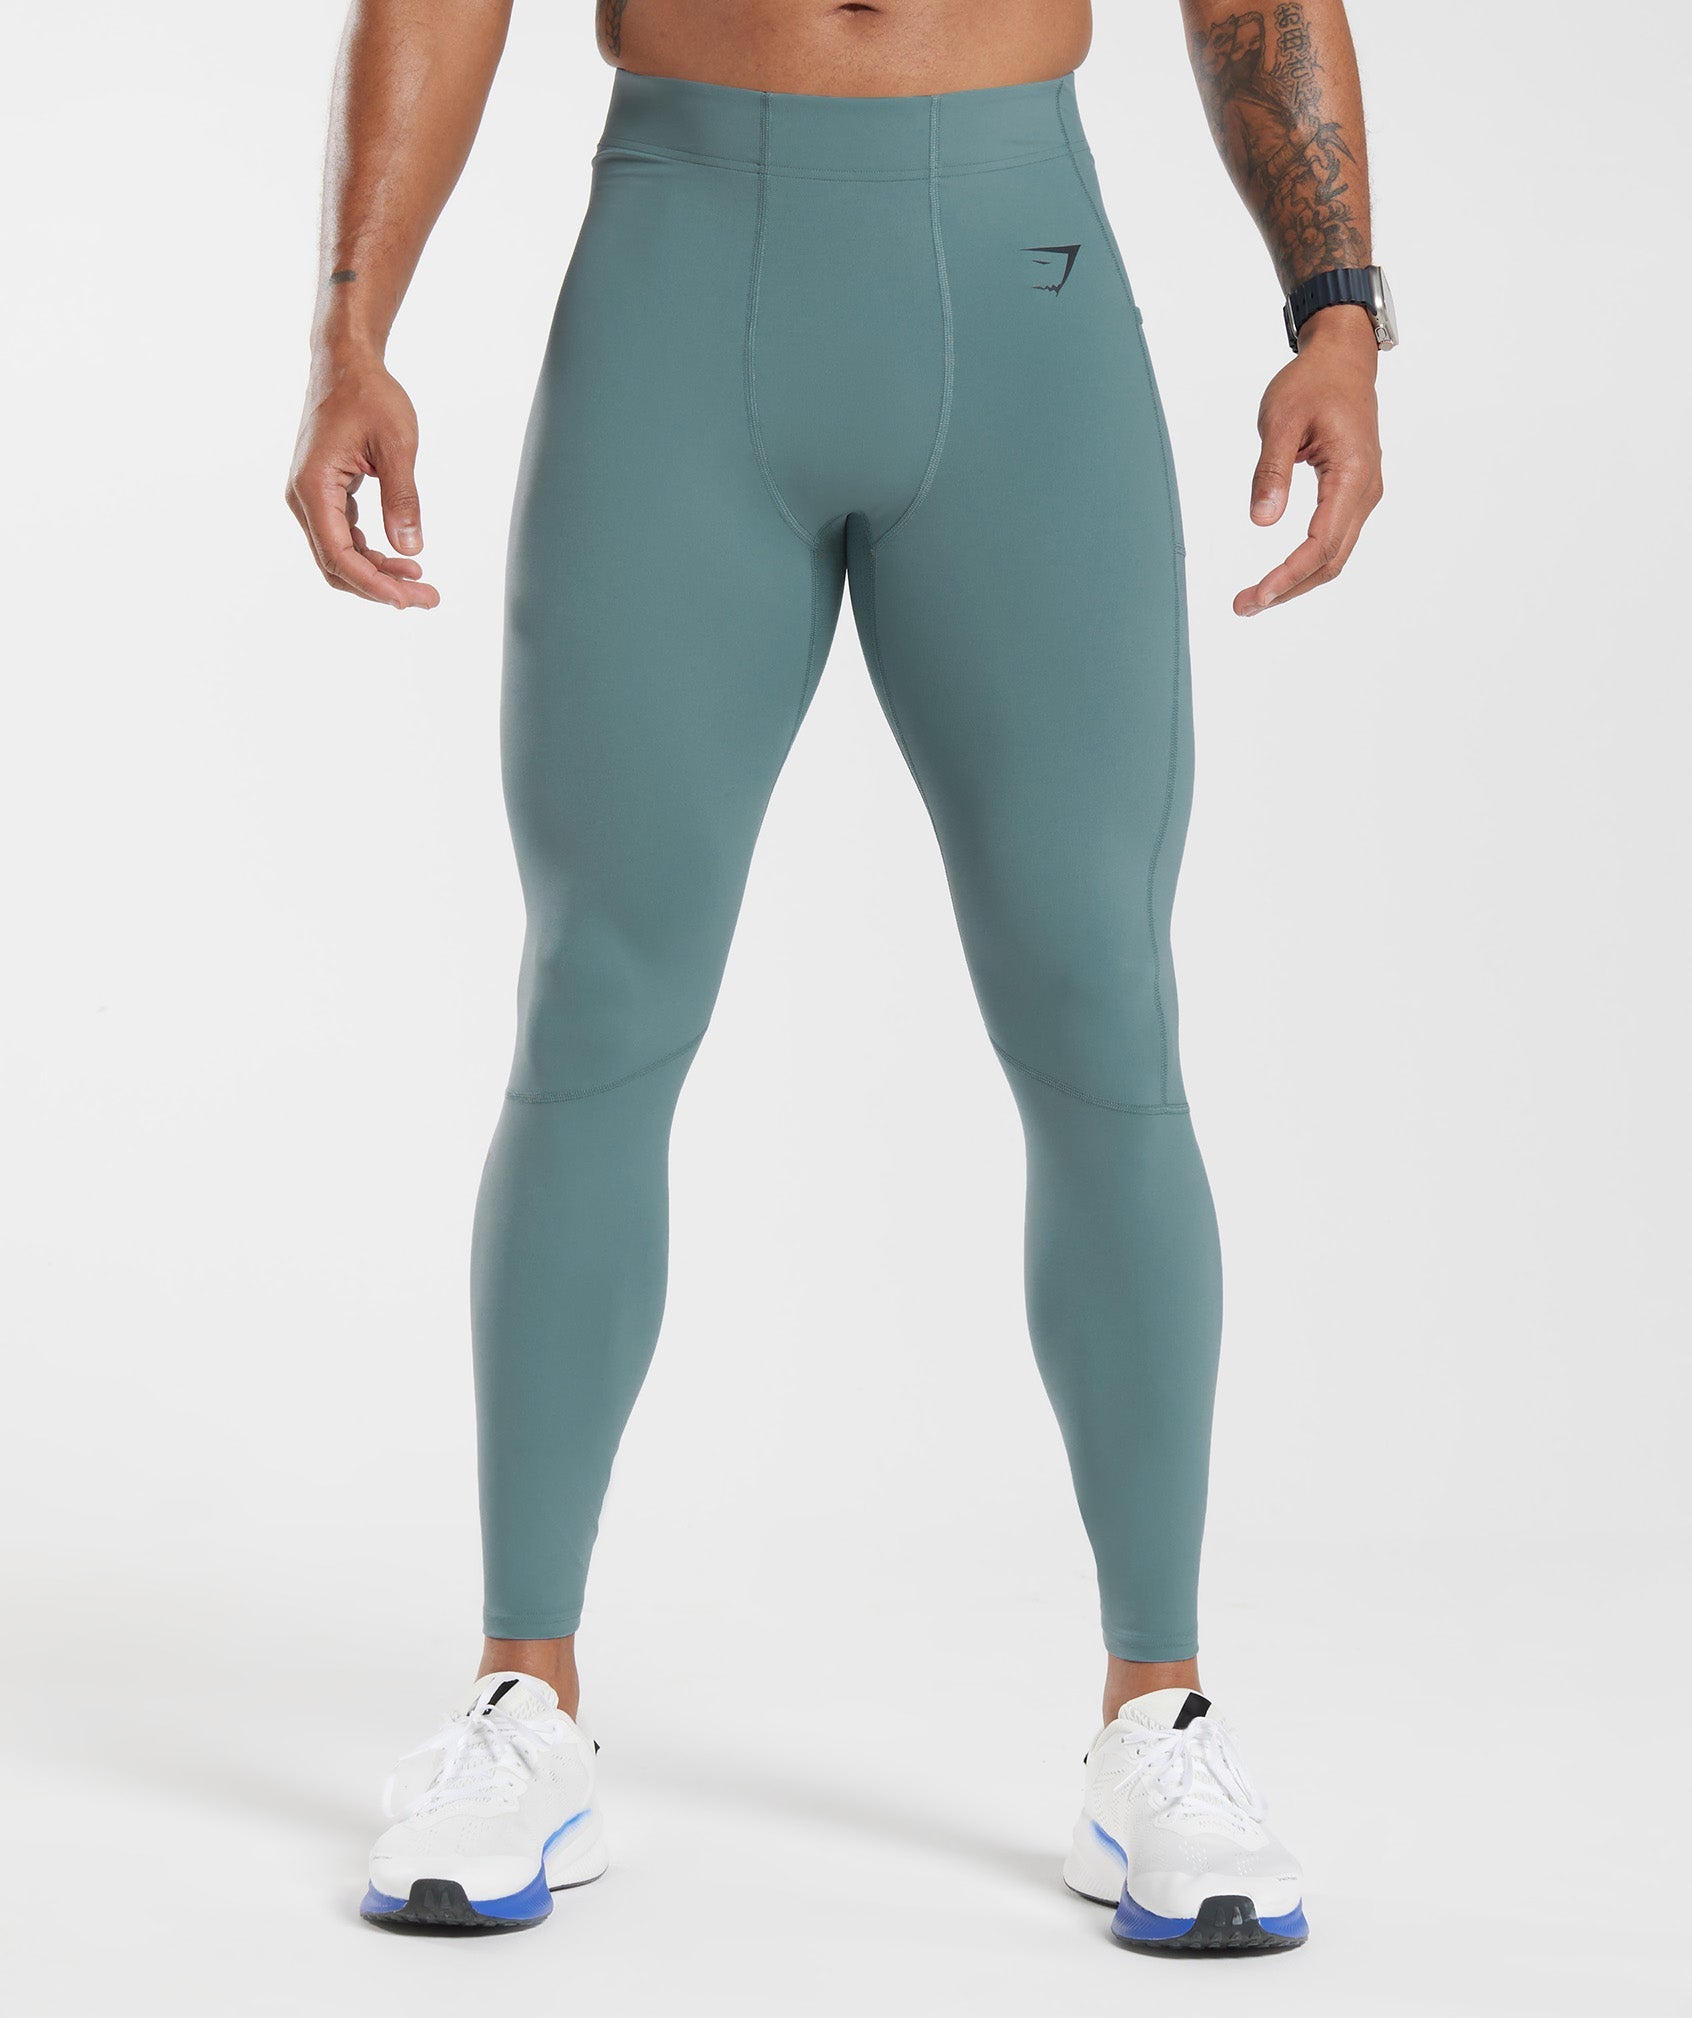 Men Compression Shorts Gym 3/4 Pant Base Layers Running Sport Tights  Leggings, Navy Blue XXL 